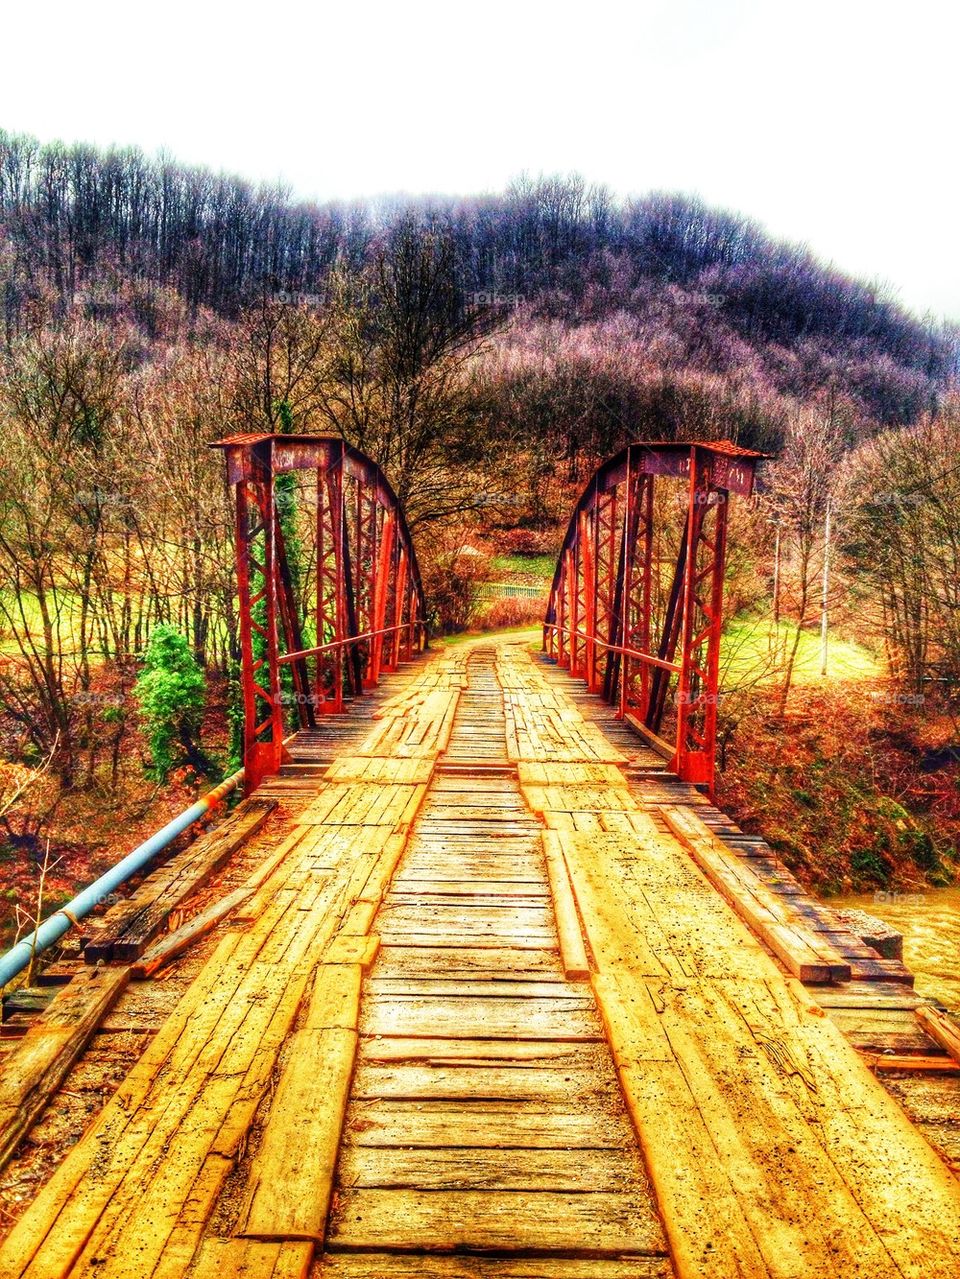 old bridge